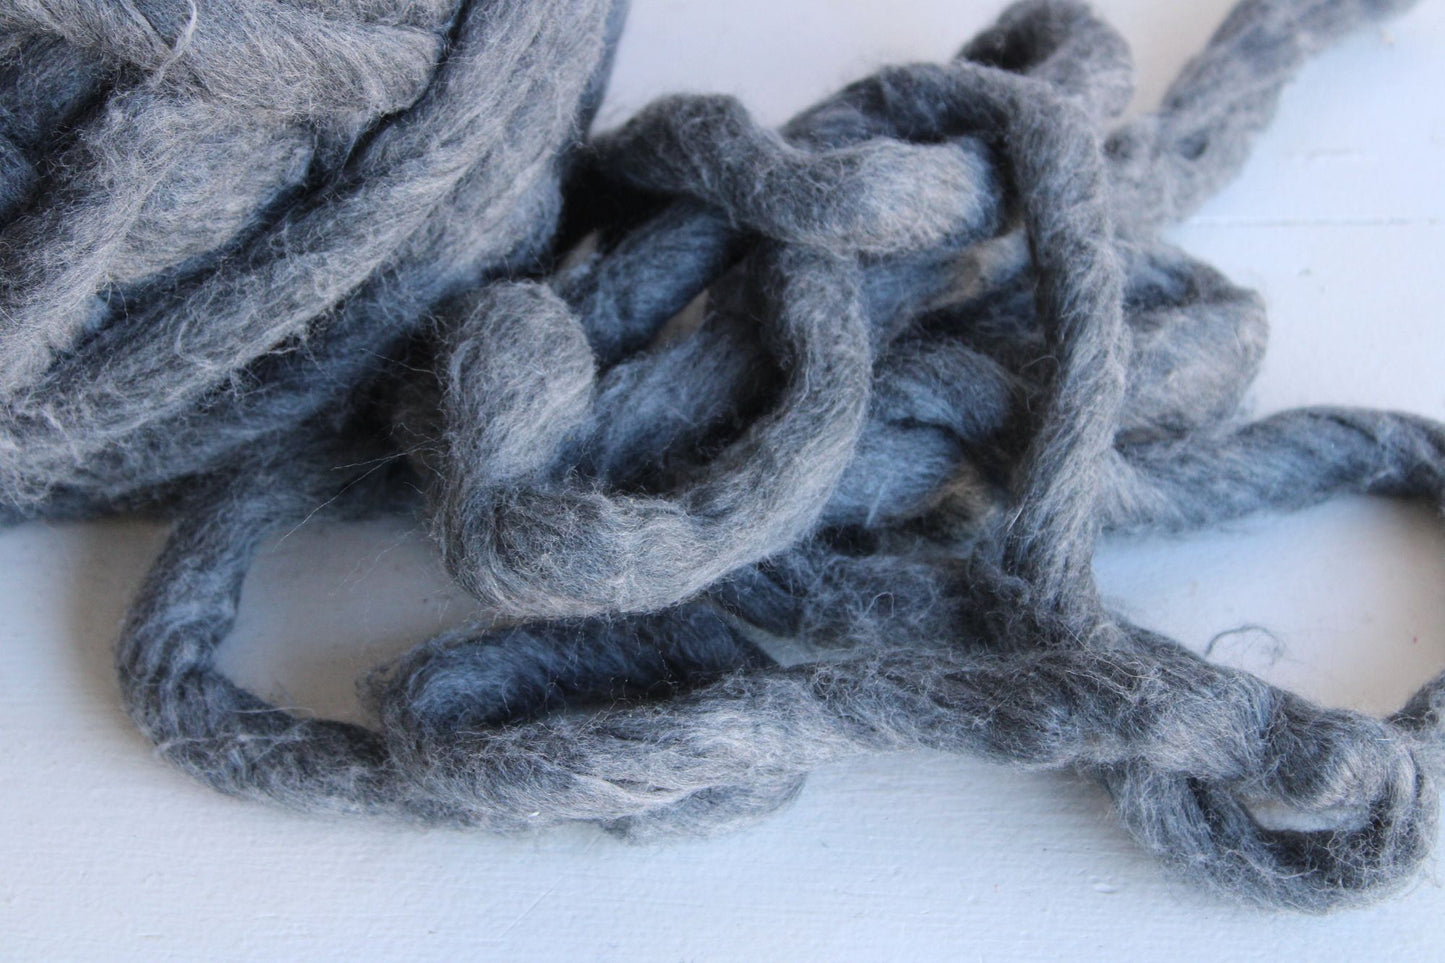 Extra Chunky Jumbo Yarn, Loops and Threads Free Spirit, Charcoal, 54 Yards, 35 oz, Knitting Supply